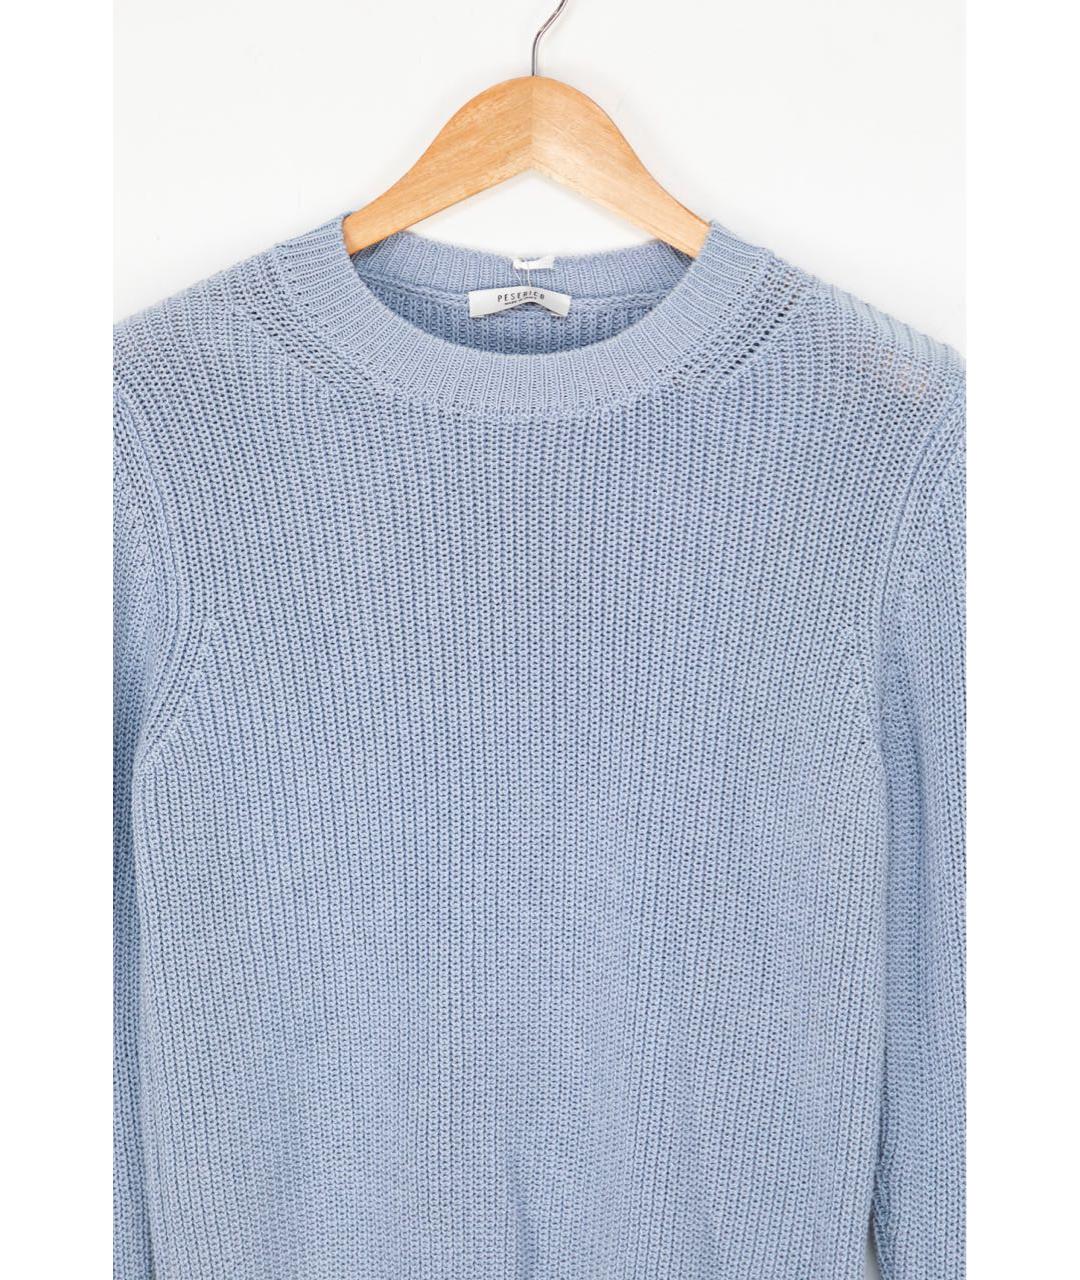 PESERICO Голубой хлопковый джемпер / свитер, фото 3